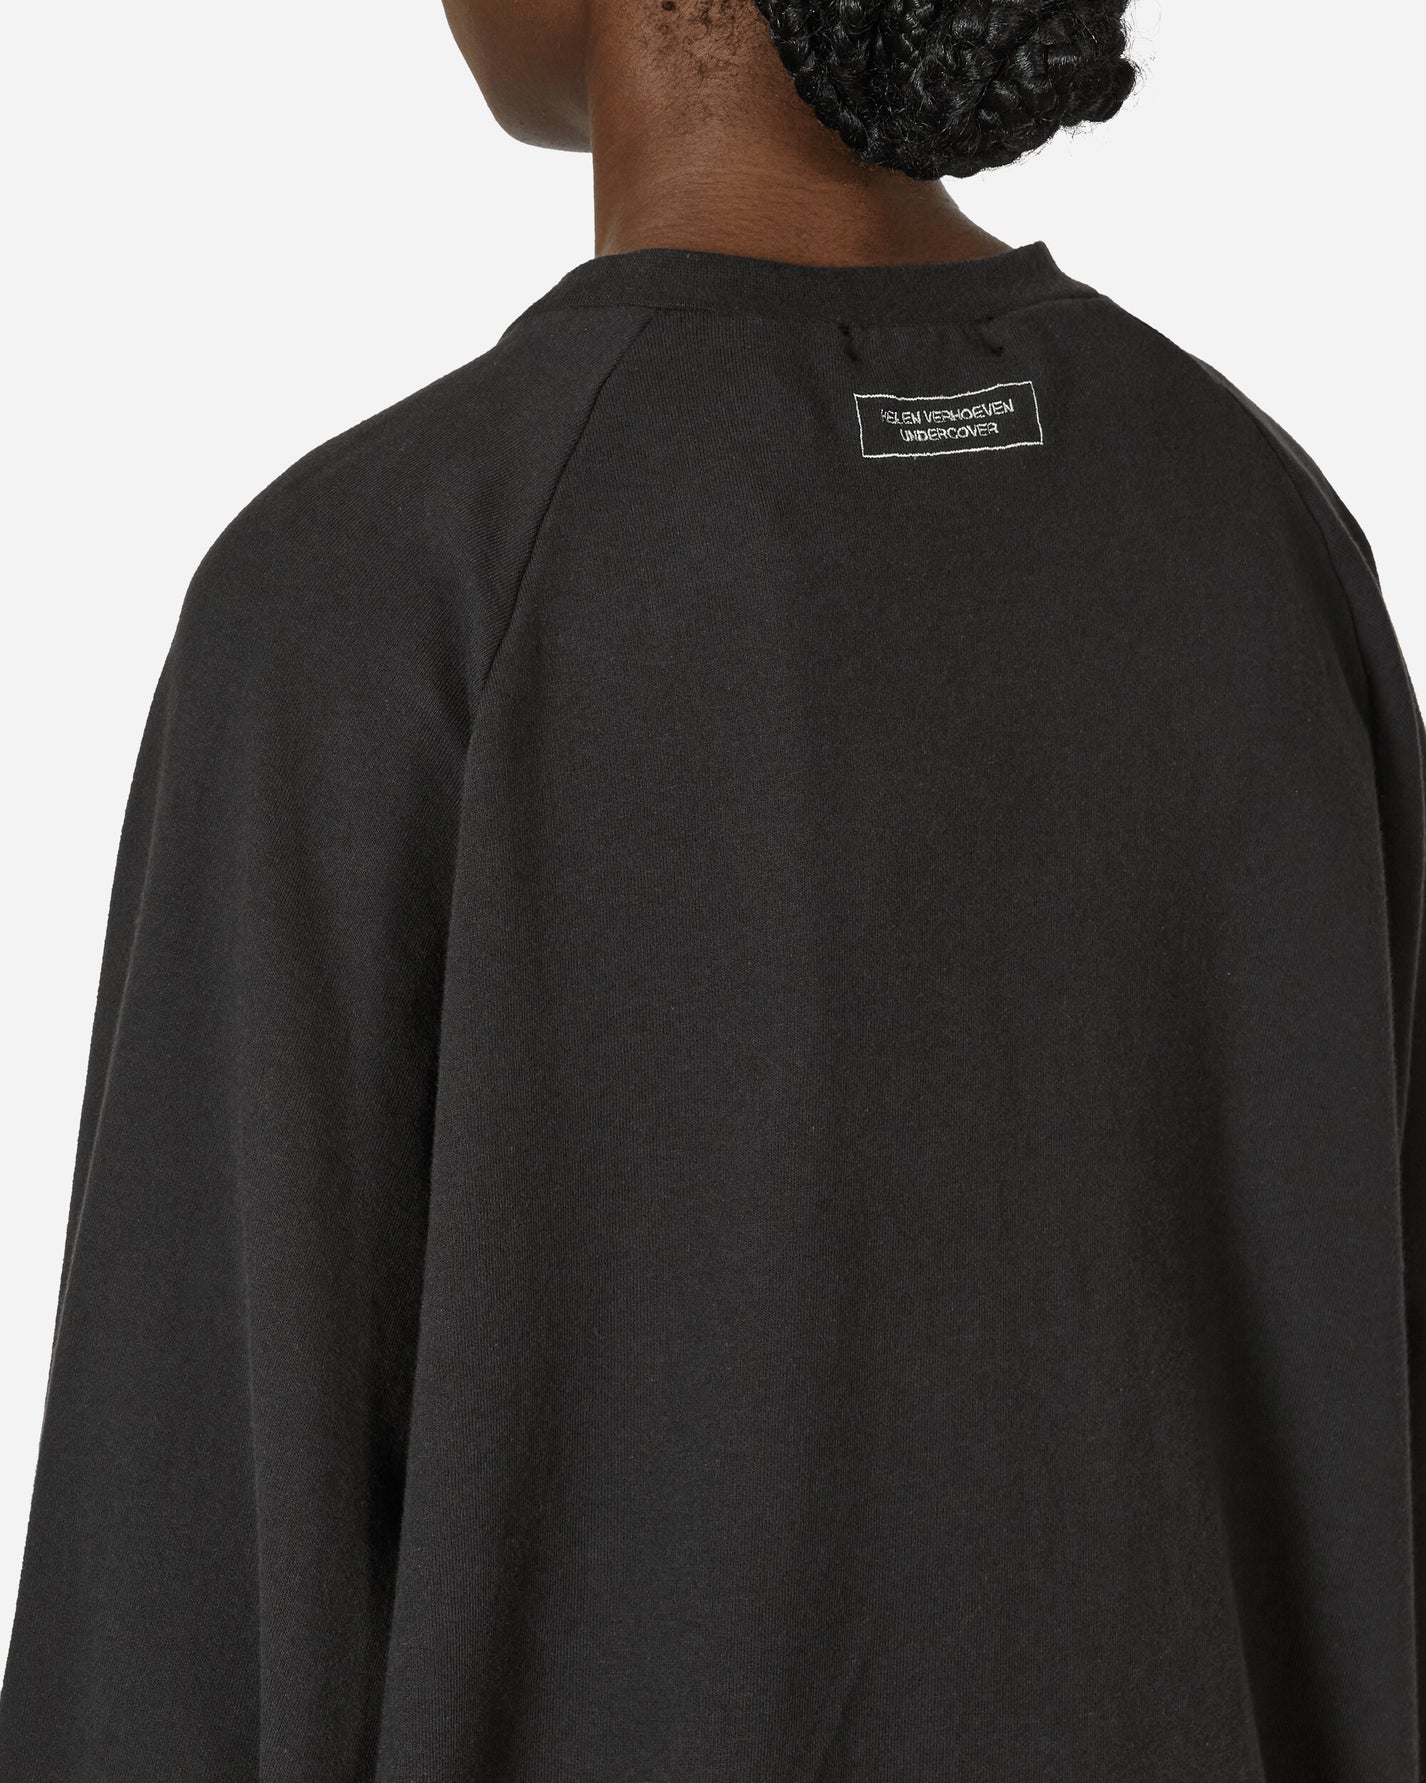 Undercover Crewneck Sweatshirt Black Sweatshirts Crewneck UC1D4808-1 1